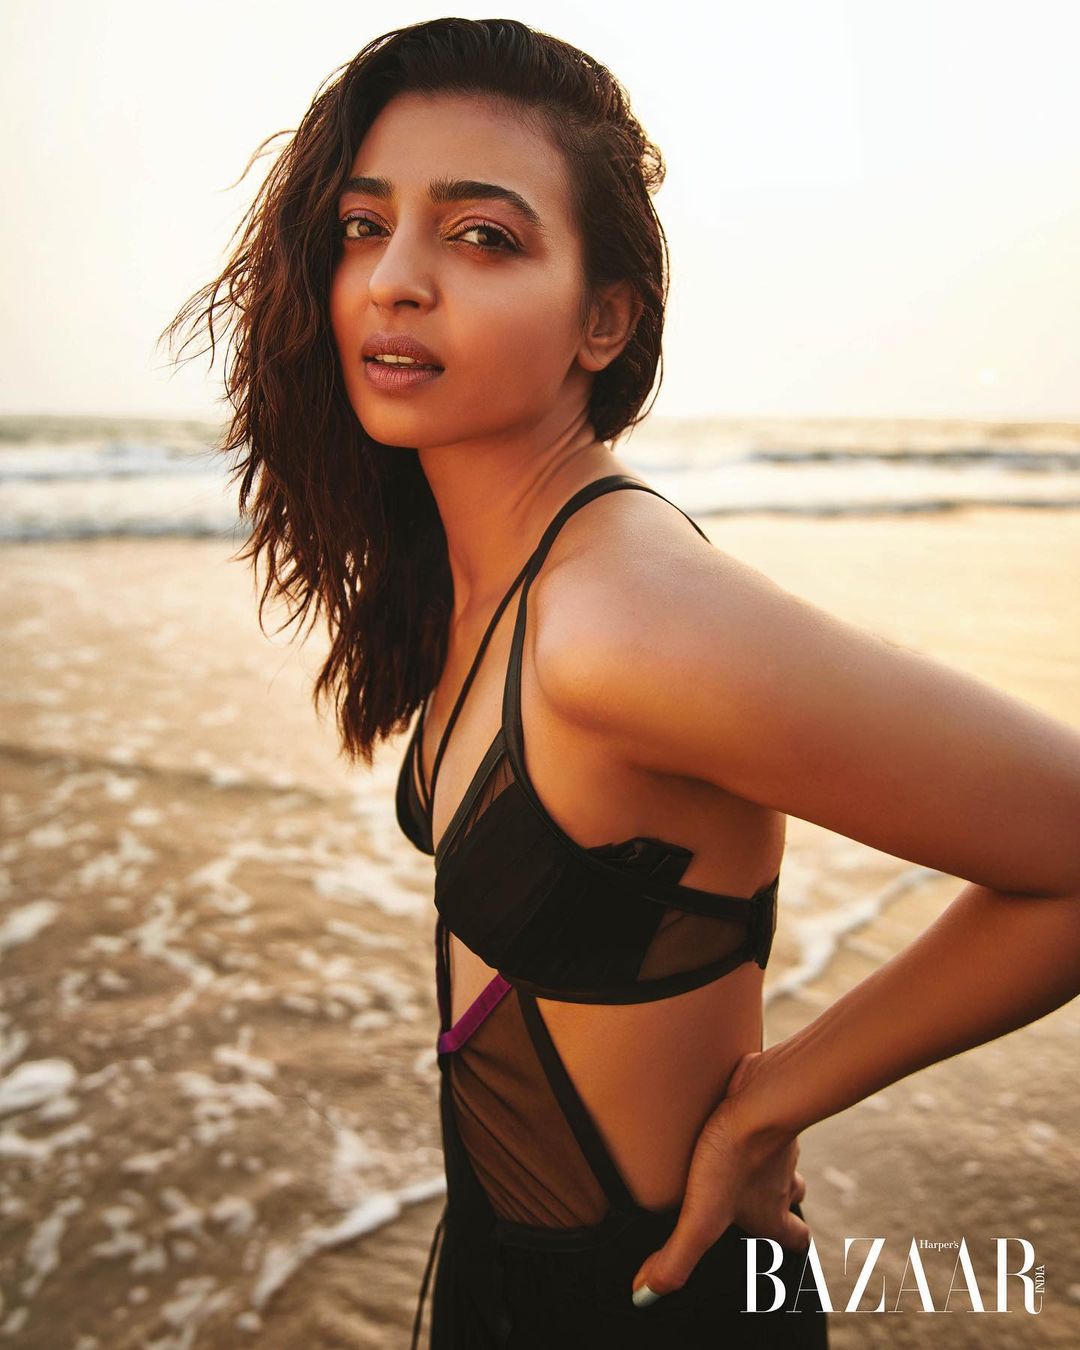 Radhika Apte looks hot in the black cutout swimwear.